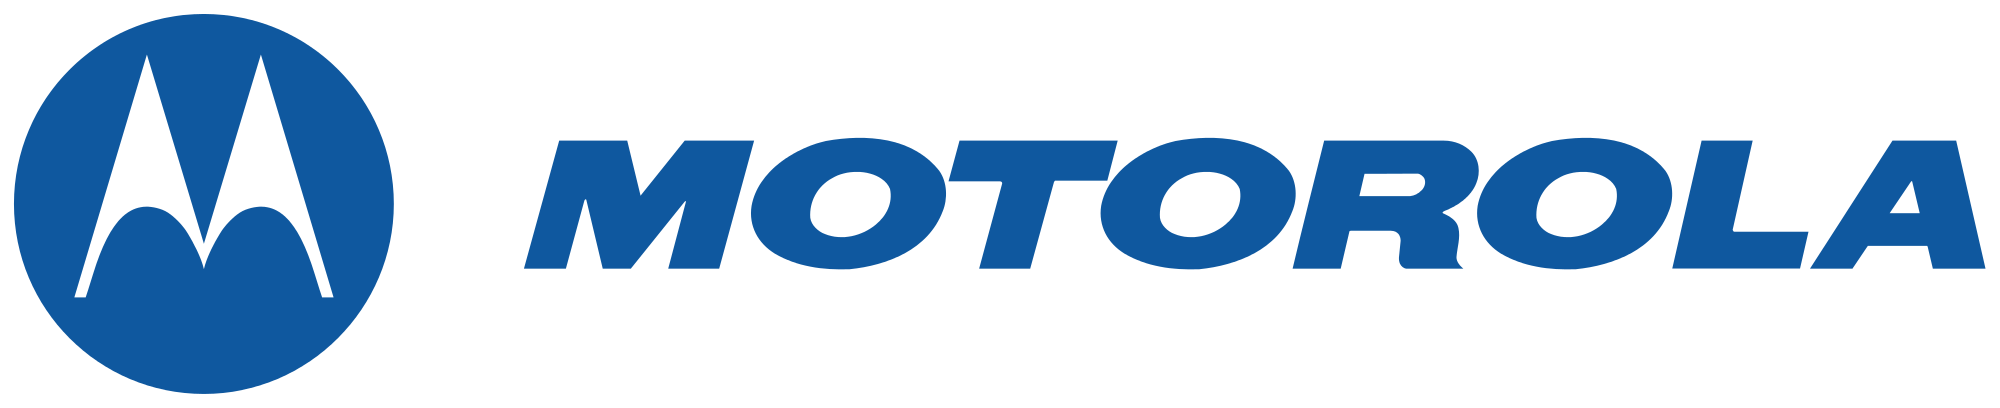 Motorola Mobility Moto G&#8309;? Plus XT1806 32 GB Smartphone - 5.5" LCD Full HD 1920 x 1080 - Cortex A53Octa-core (8 Core) 2 GHz - 3 GB RAM - Android 7.1 Nougat - 4G